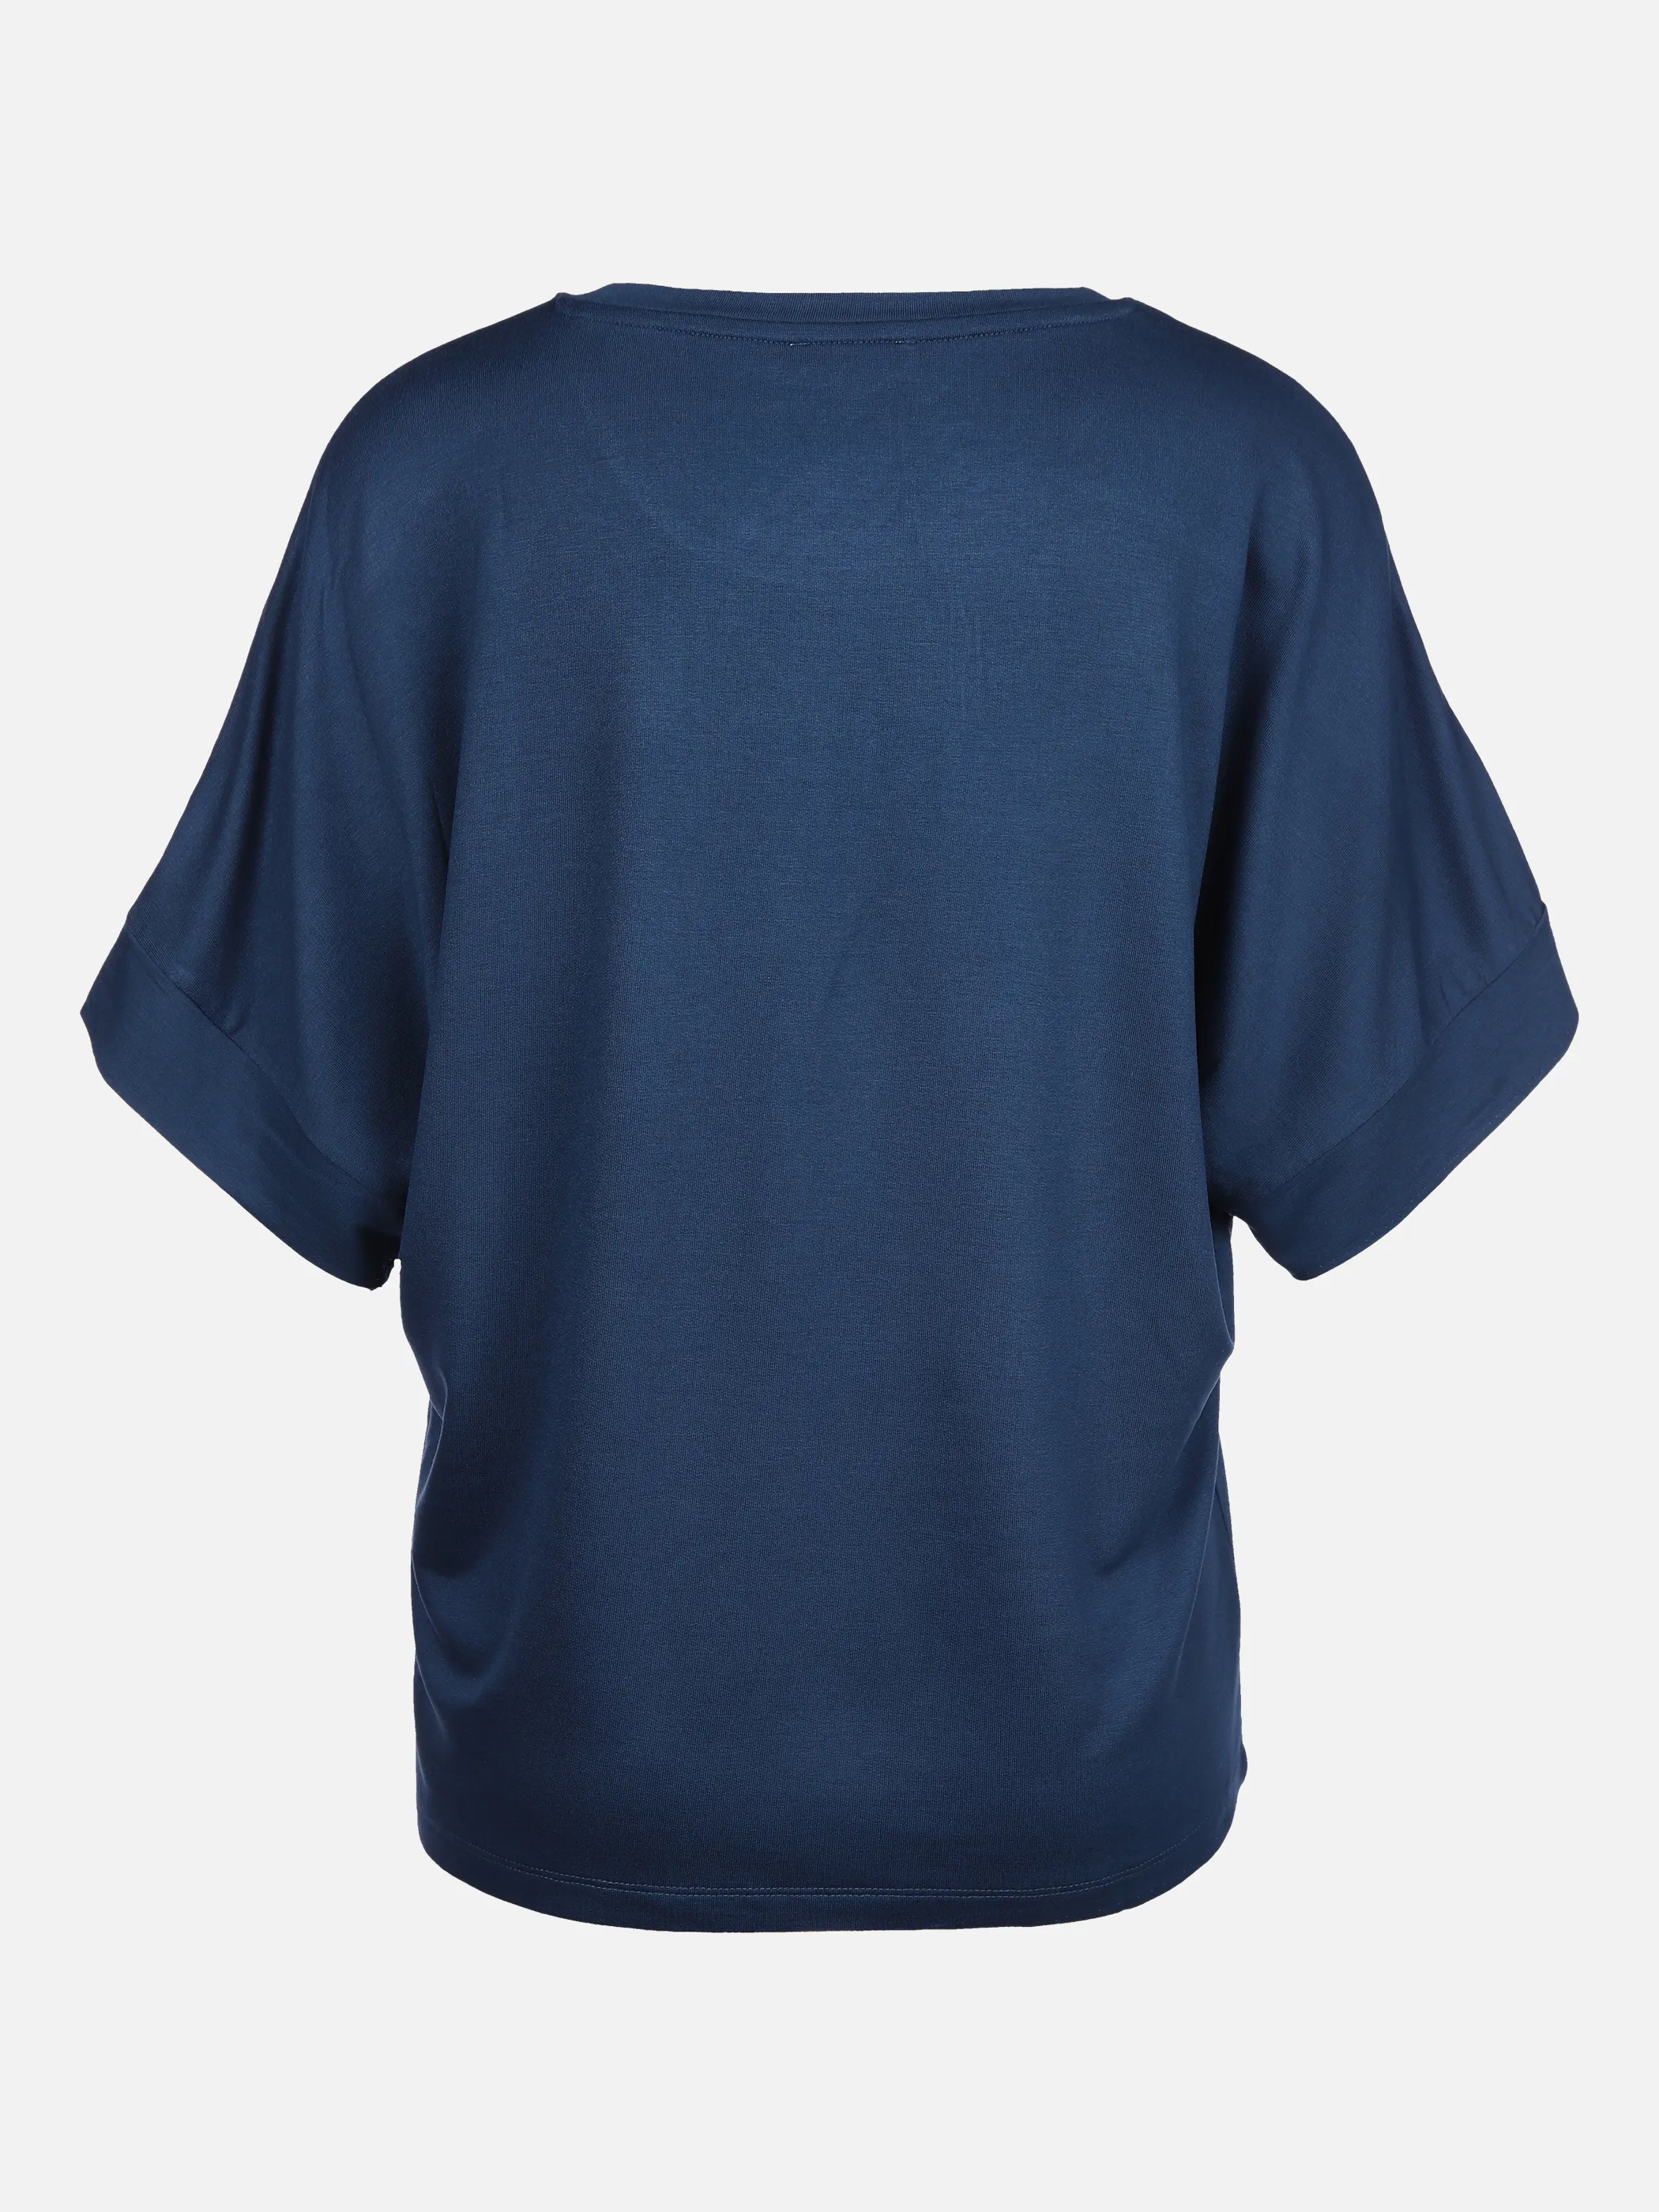 Tom Tailor 1031199 T-shirt boat neck prin Blau 865213 11758 2